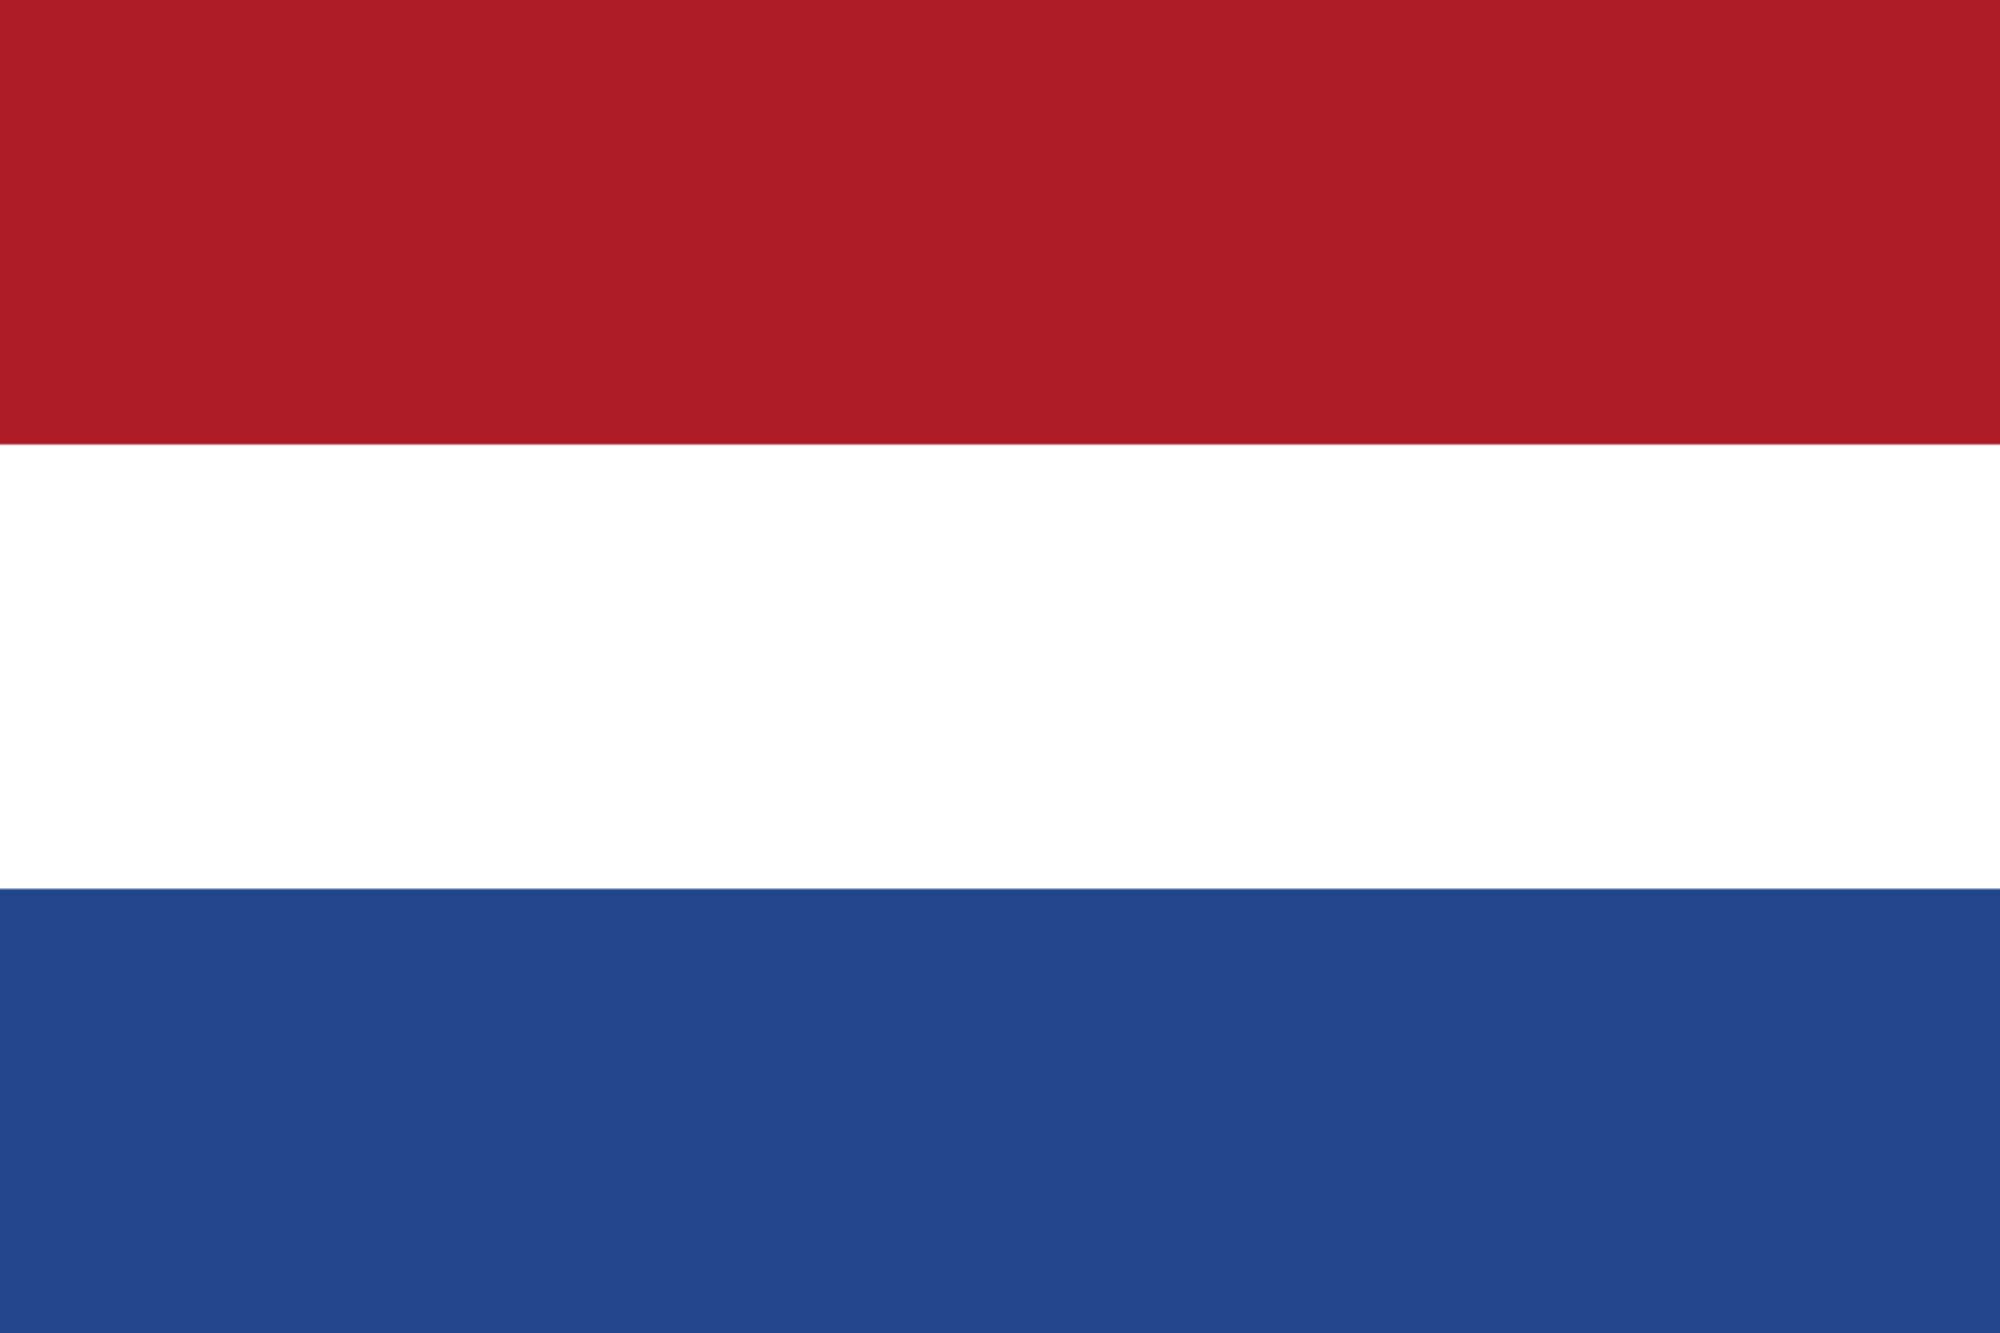 The Netherlands awarded individual membership under IMMAF